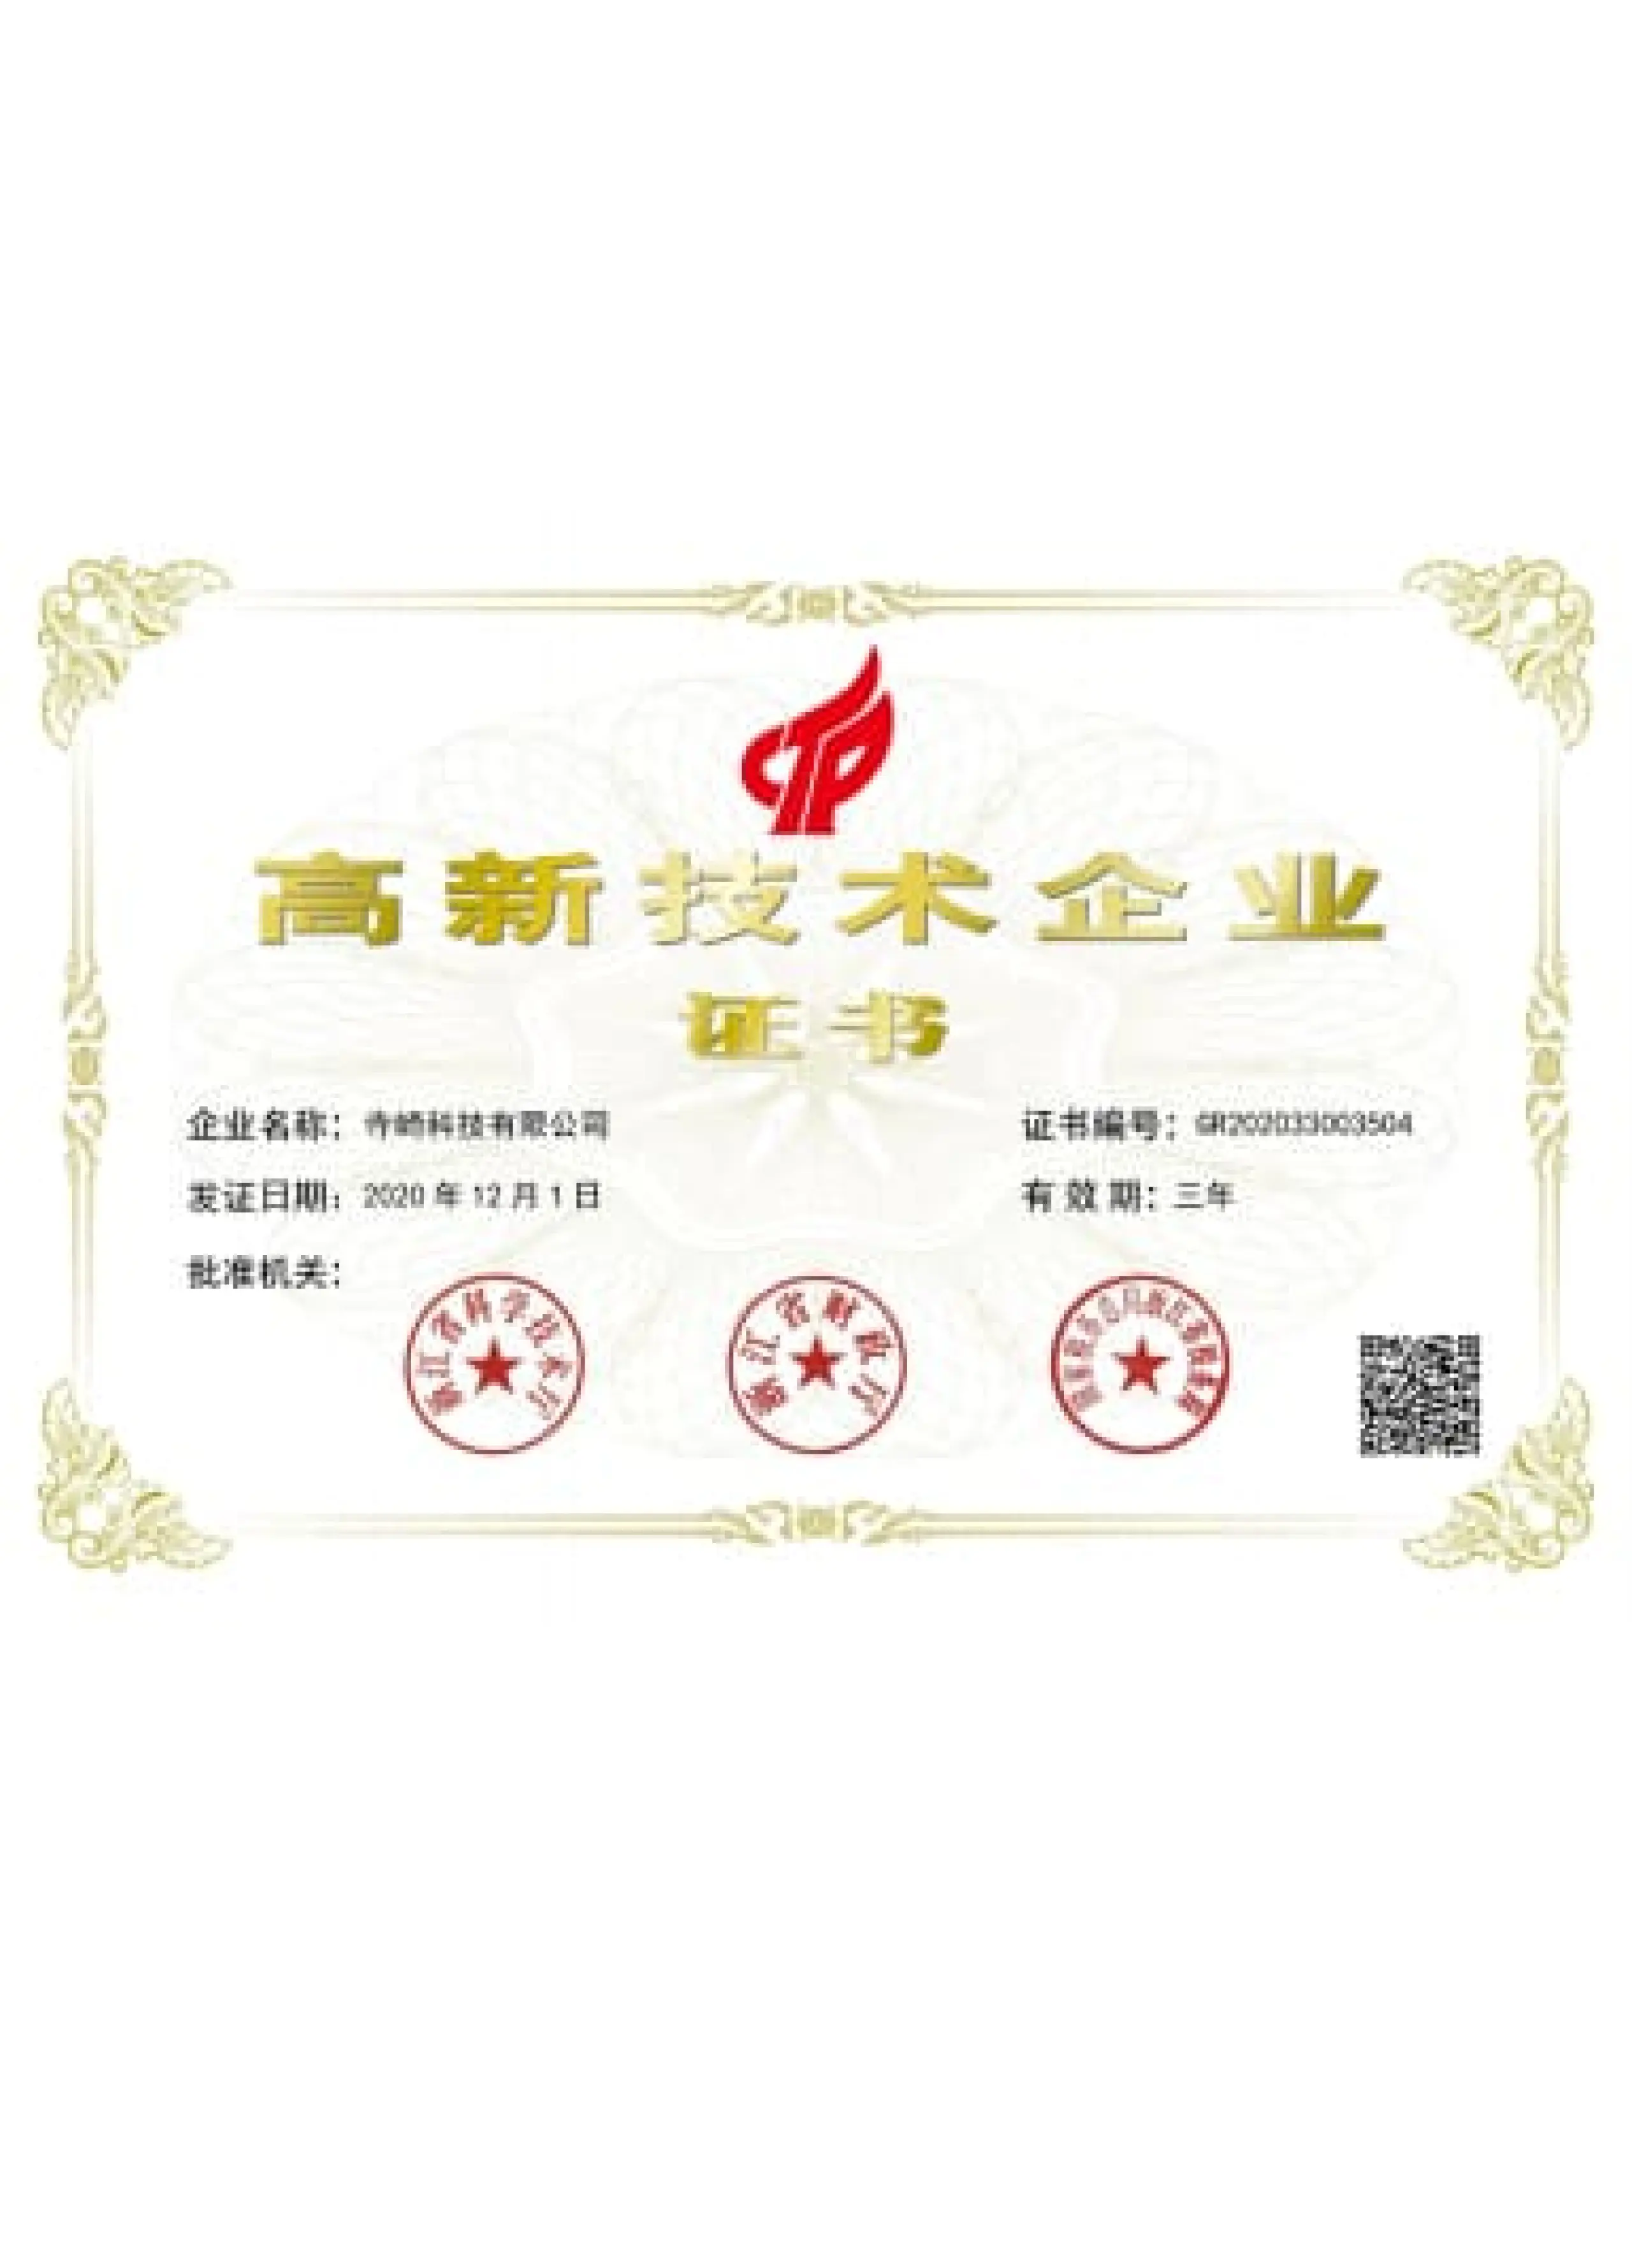 Certificates Of Advanced Technology Enterprises